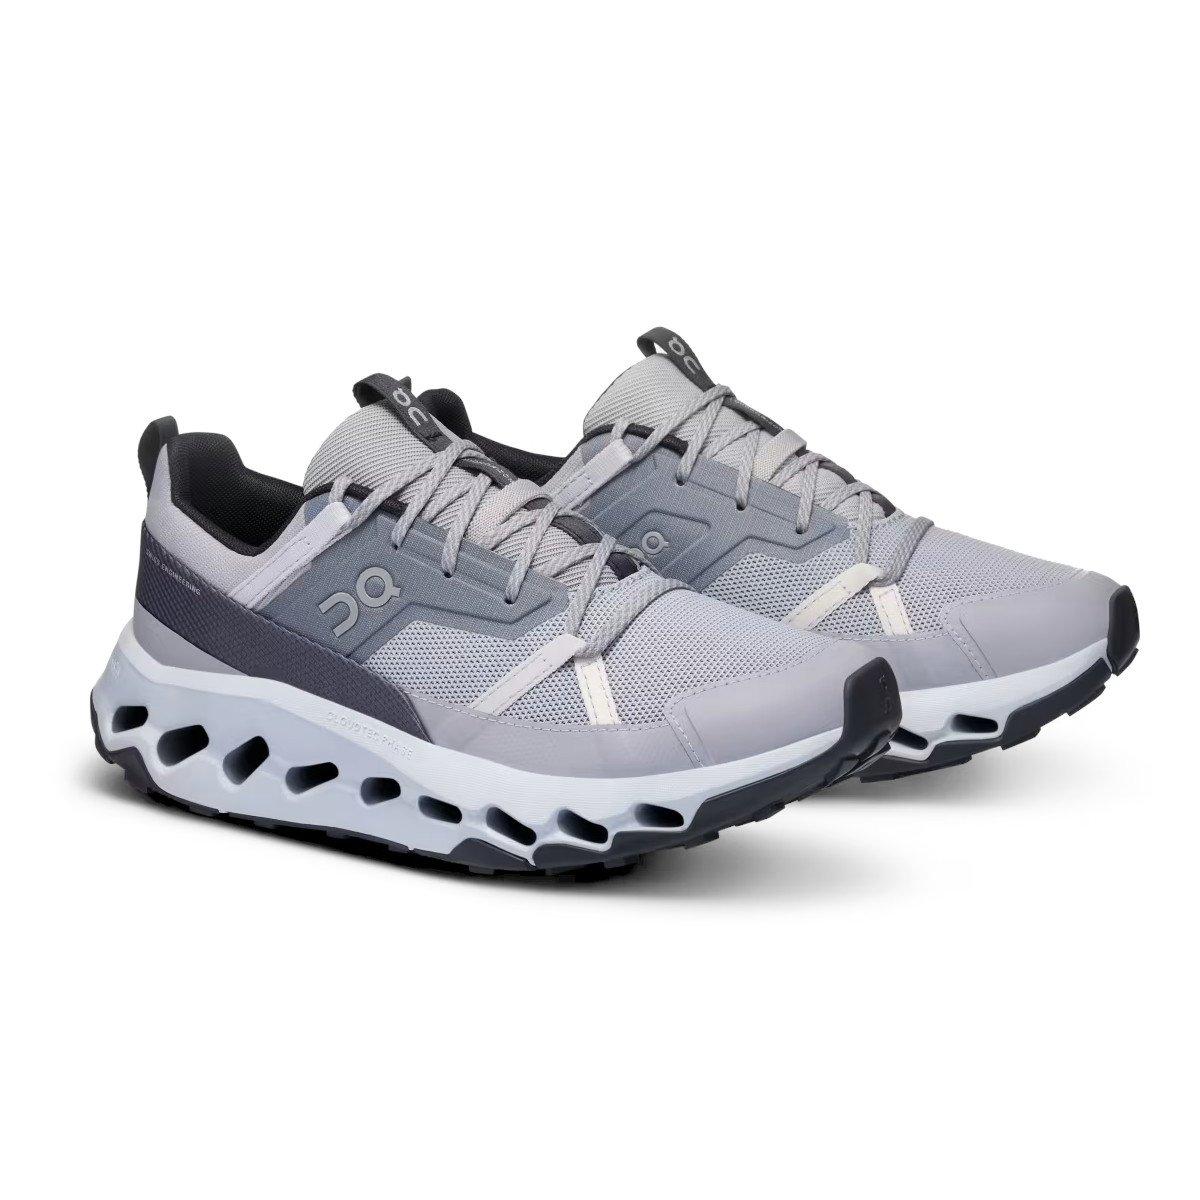 On Women's Cloudhorizon Hiking Shoes - Grey